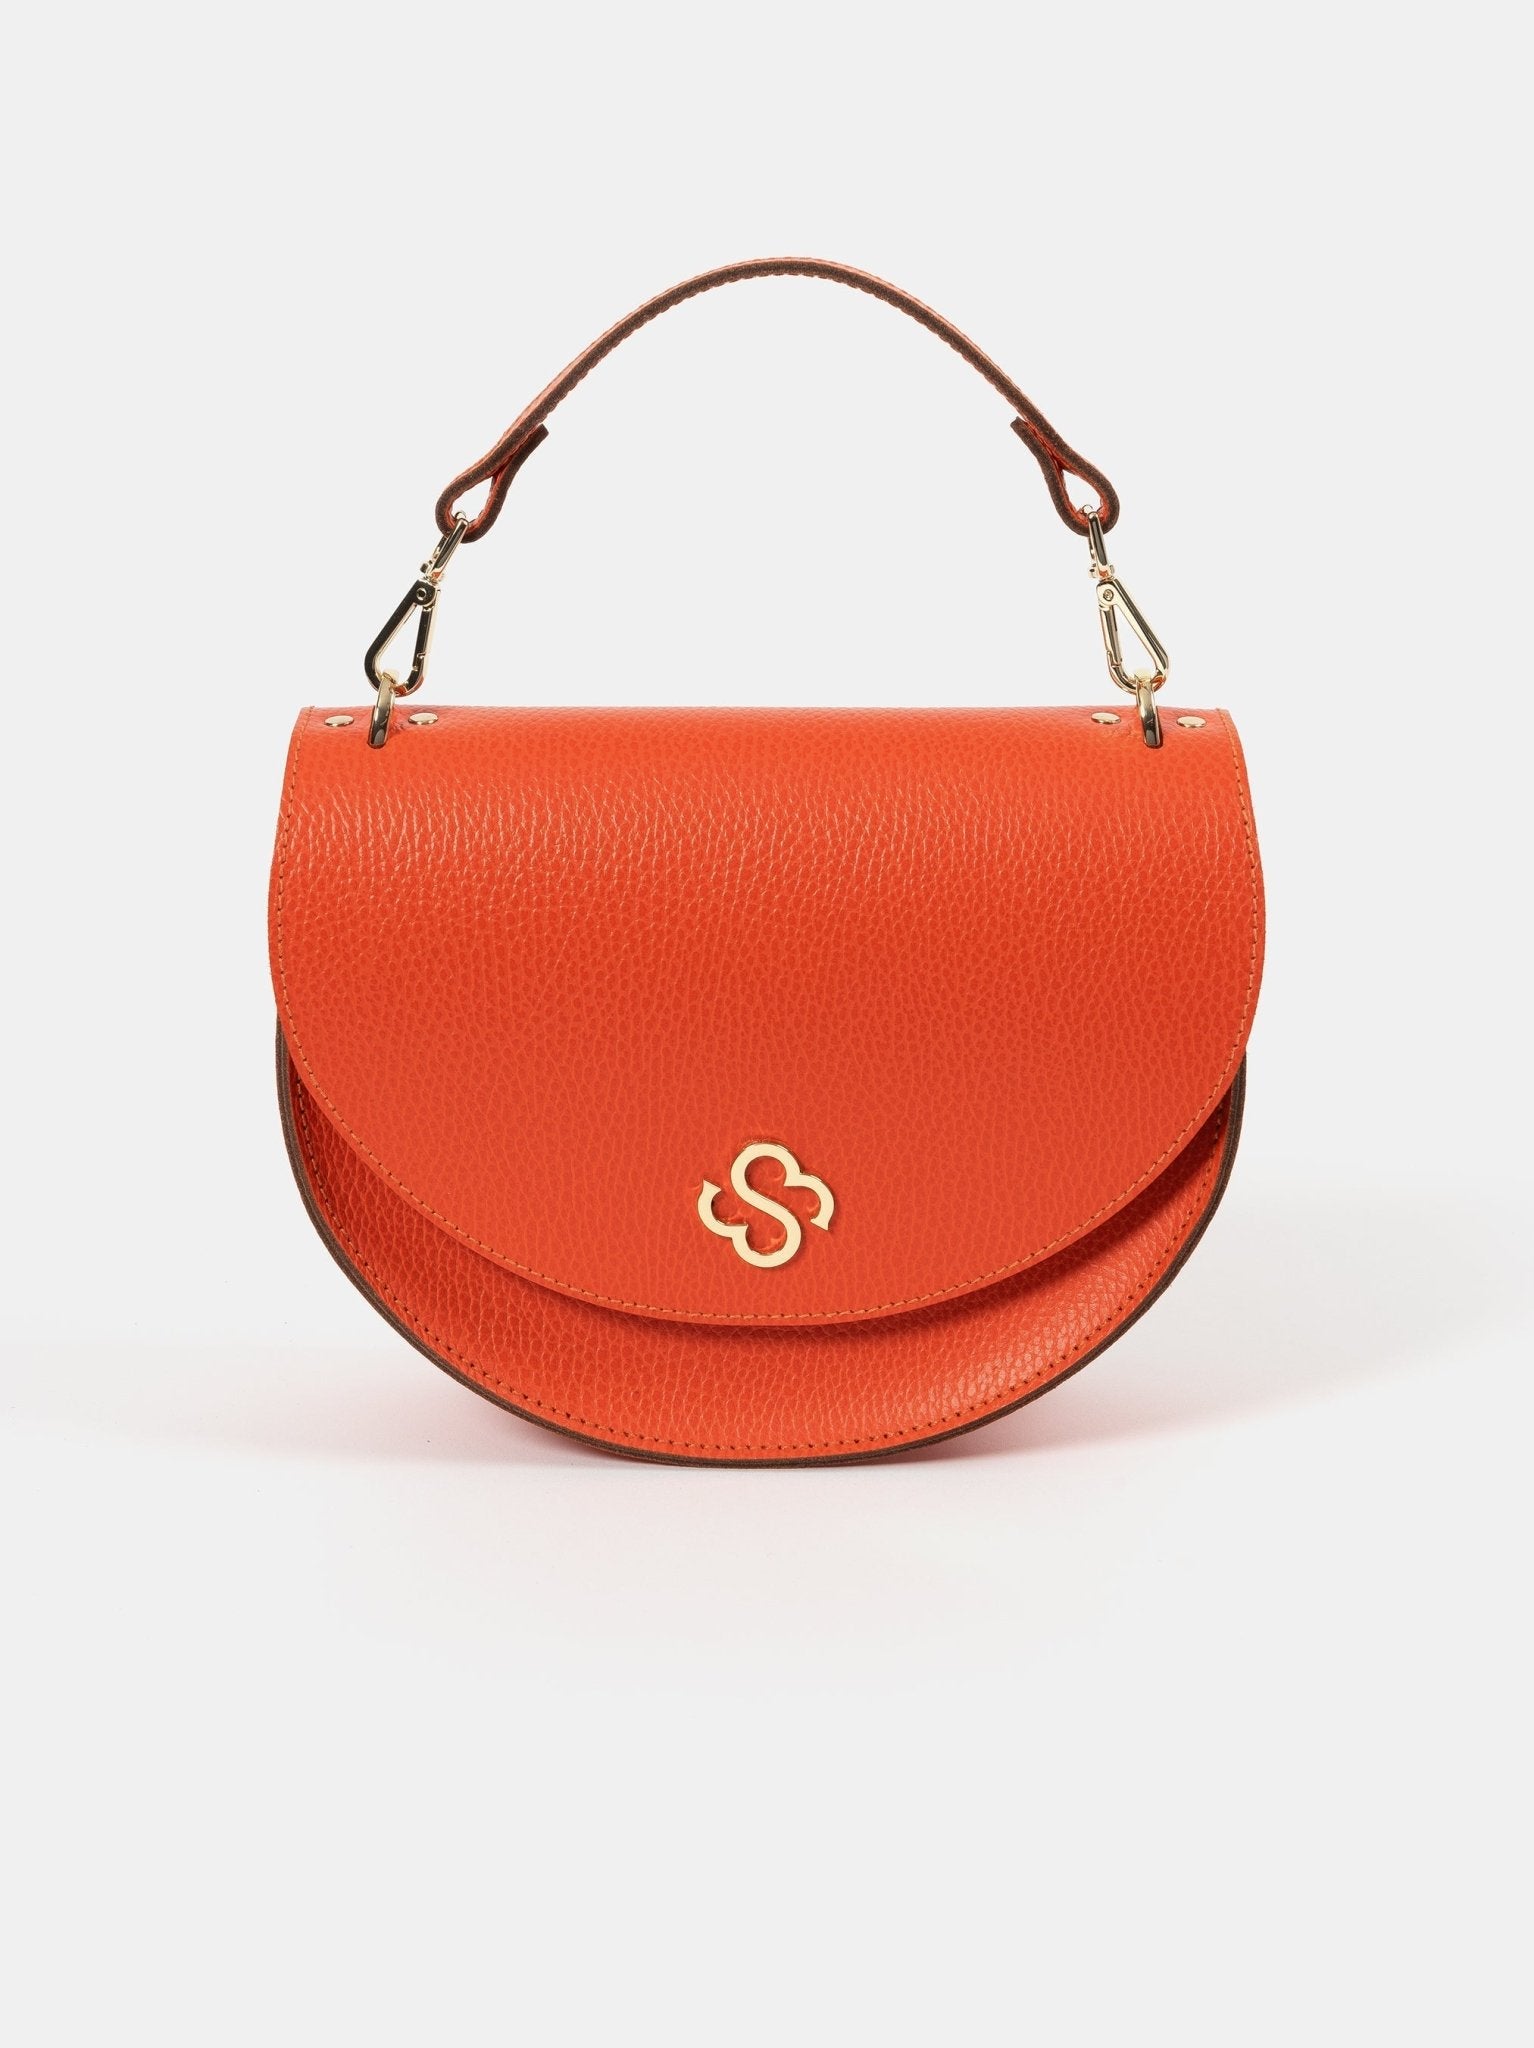 The Cambridge Satchel Co. Women's Handbag